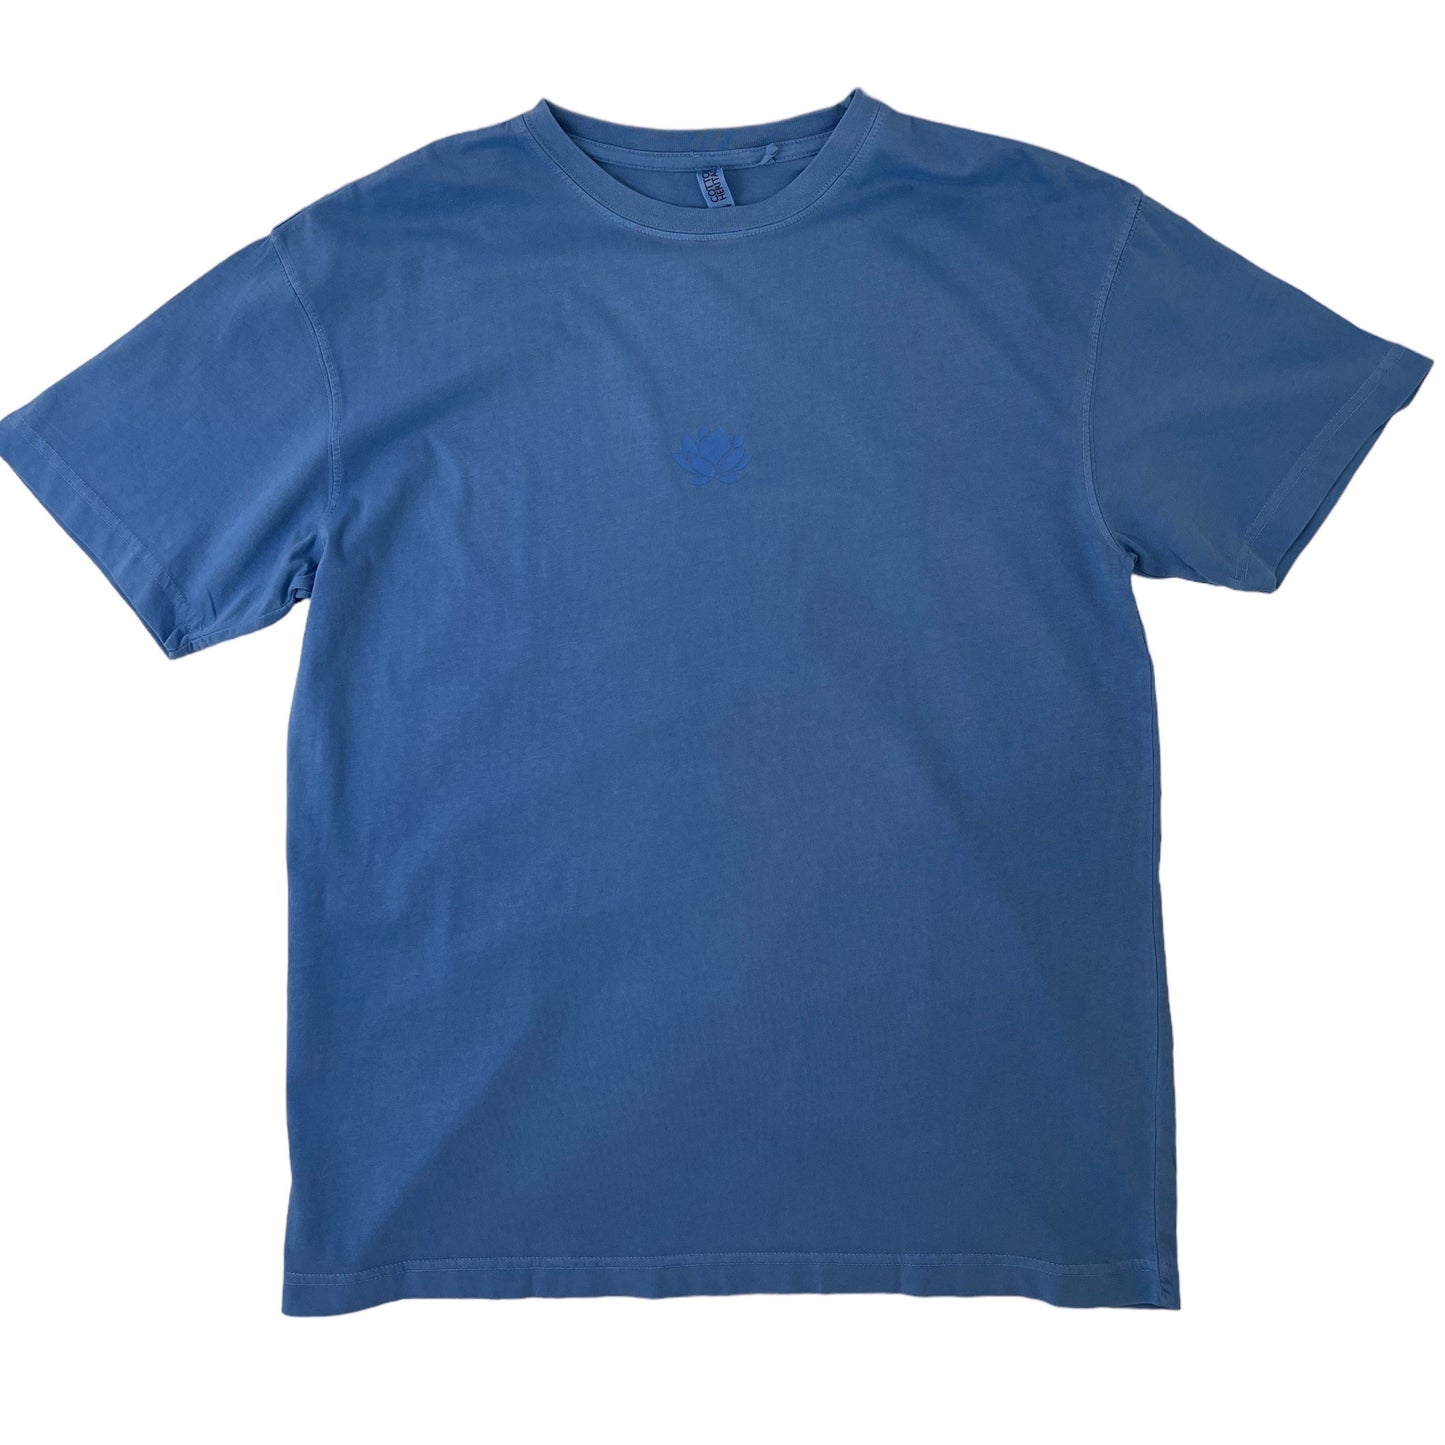 Lotus Regatta Blue T-Shirt